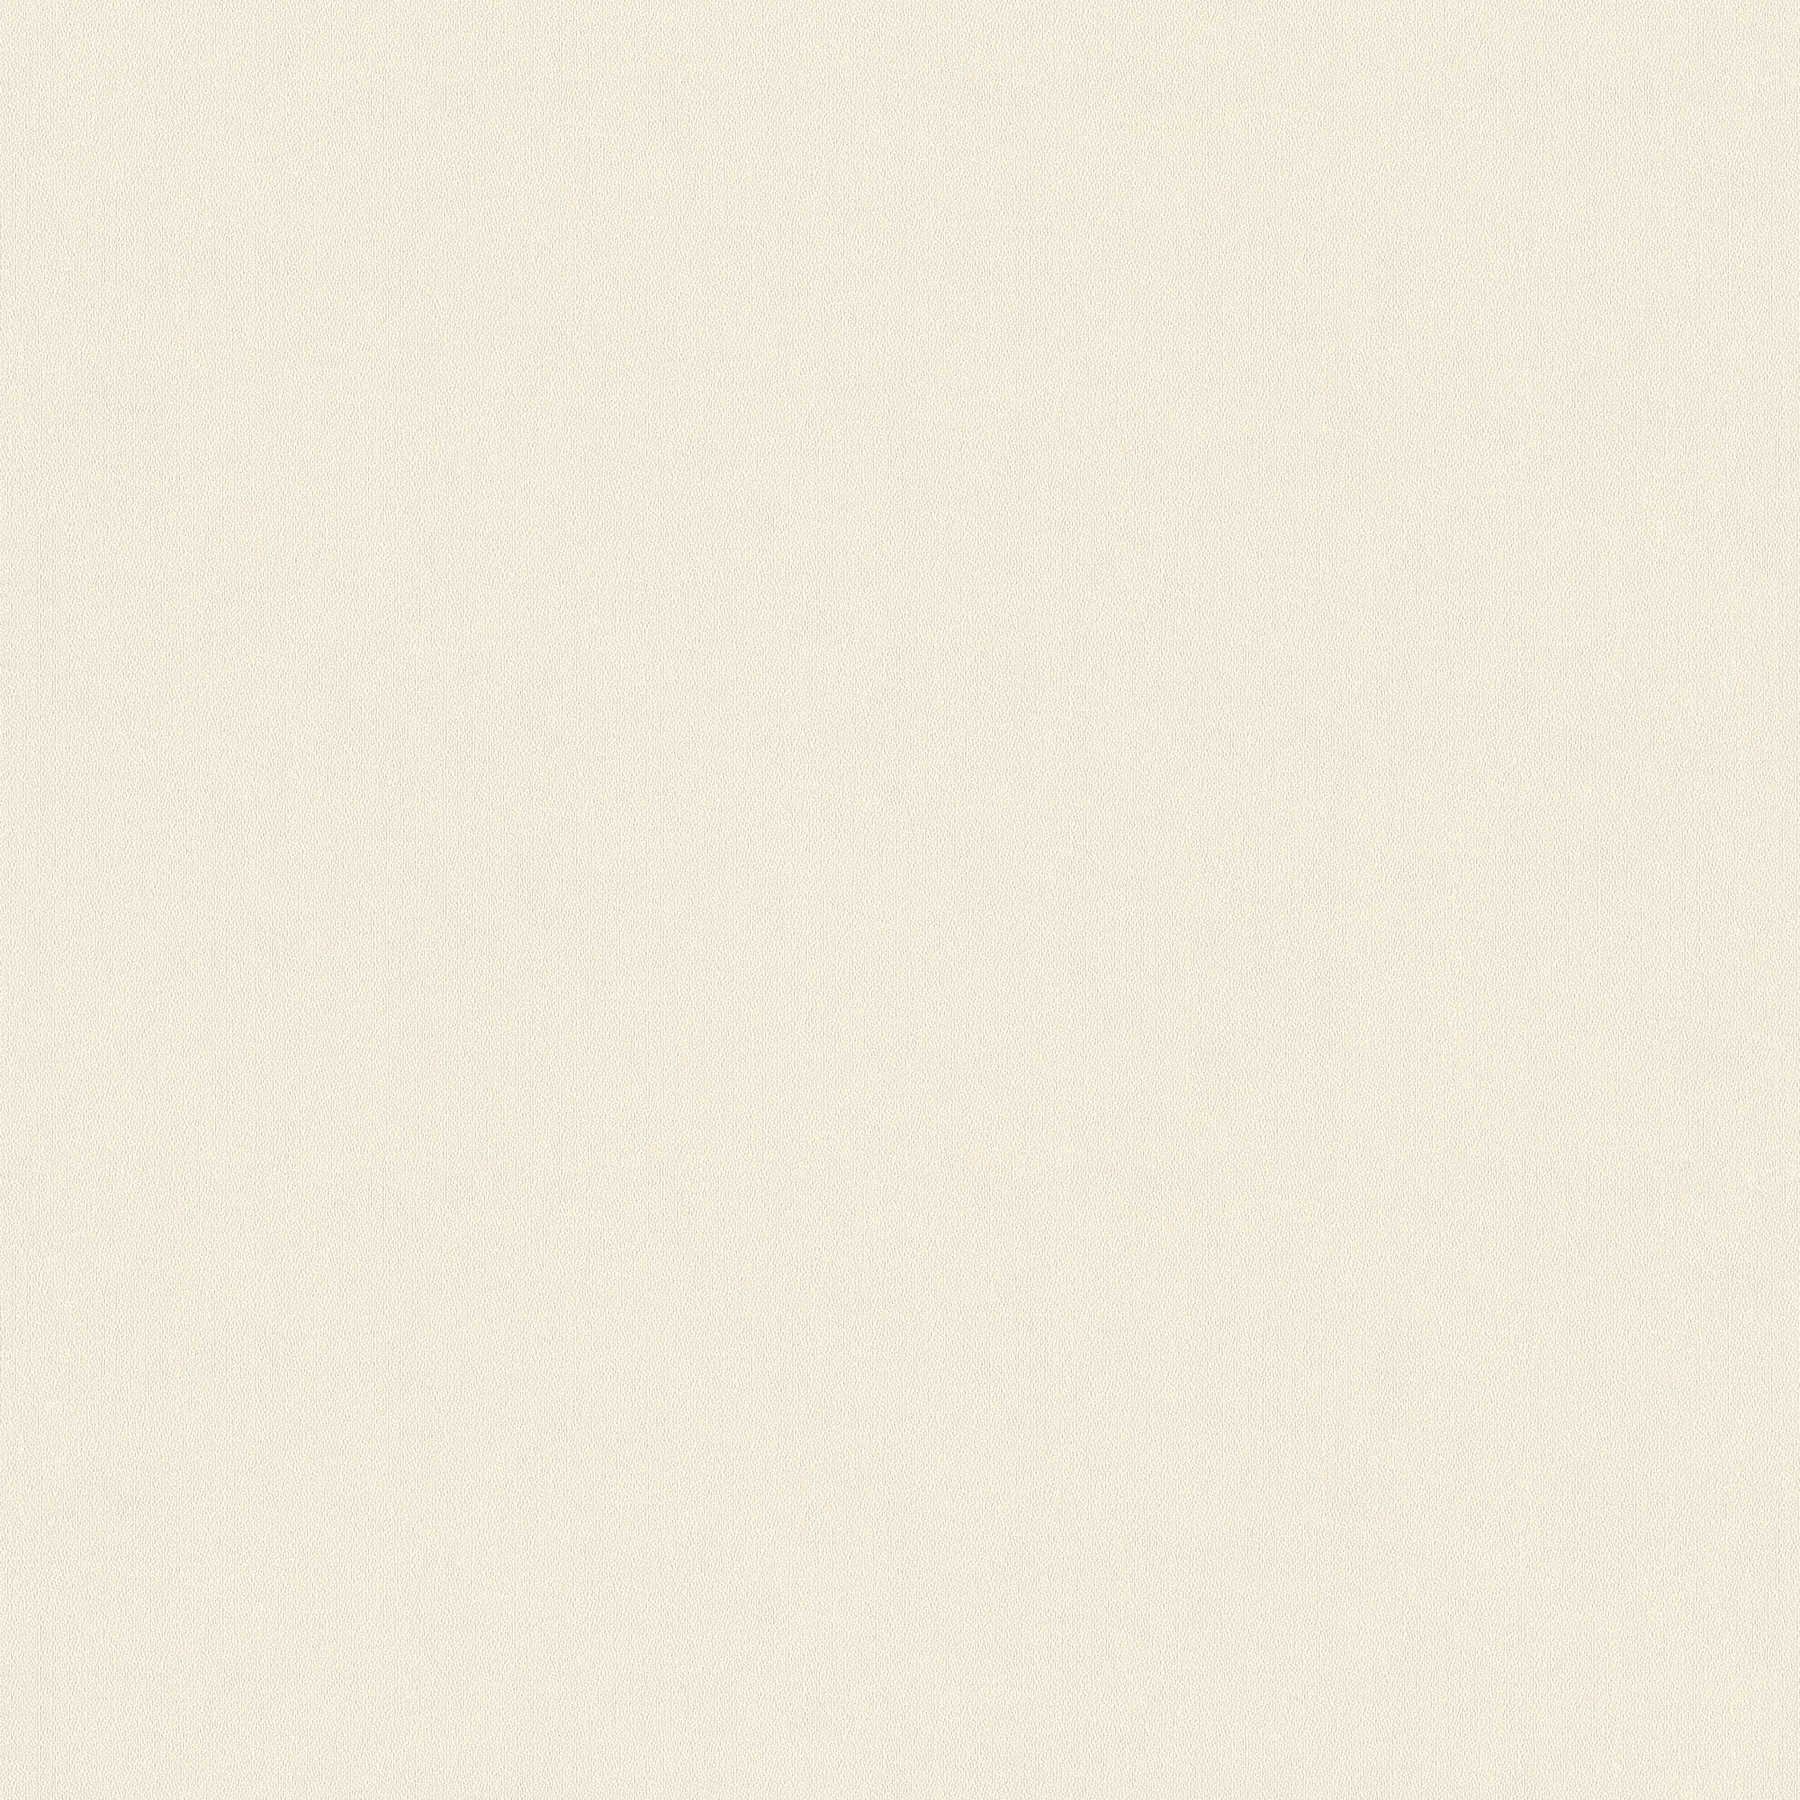 Papel pintado liso no tejido, ancho doble 106cm - Beige, Crema, Gris
